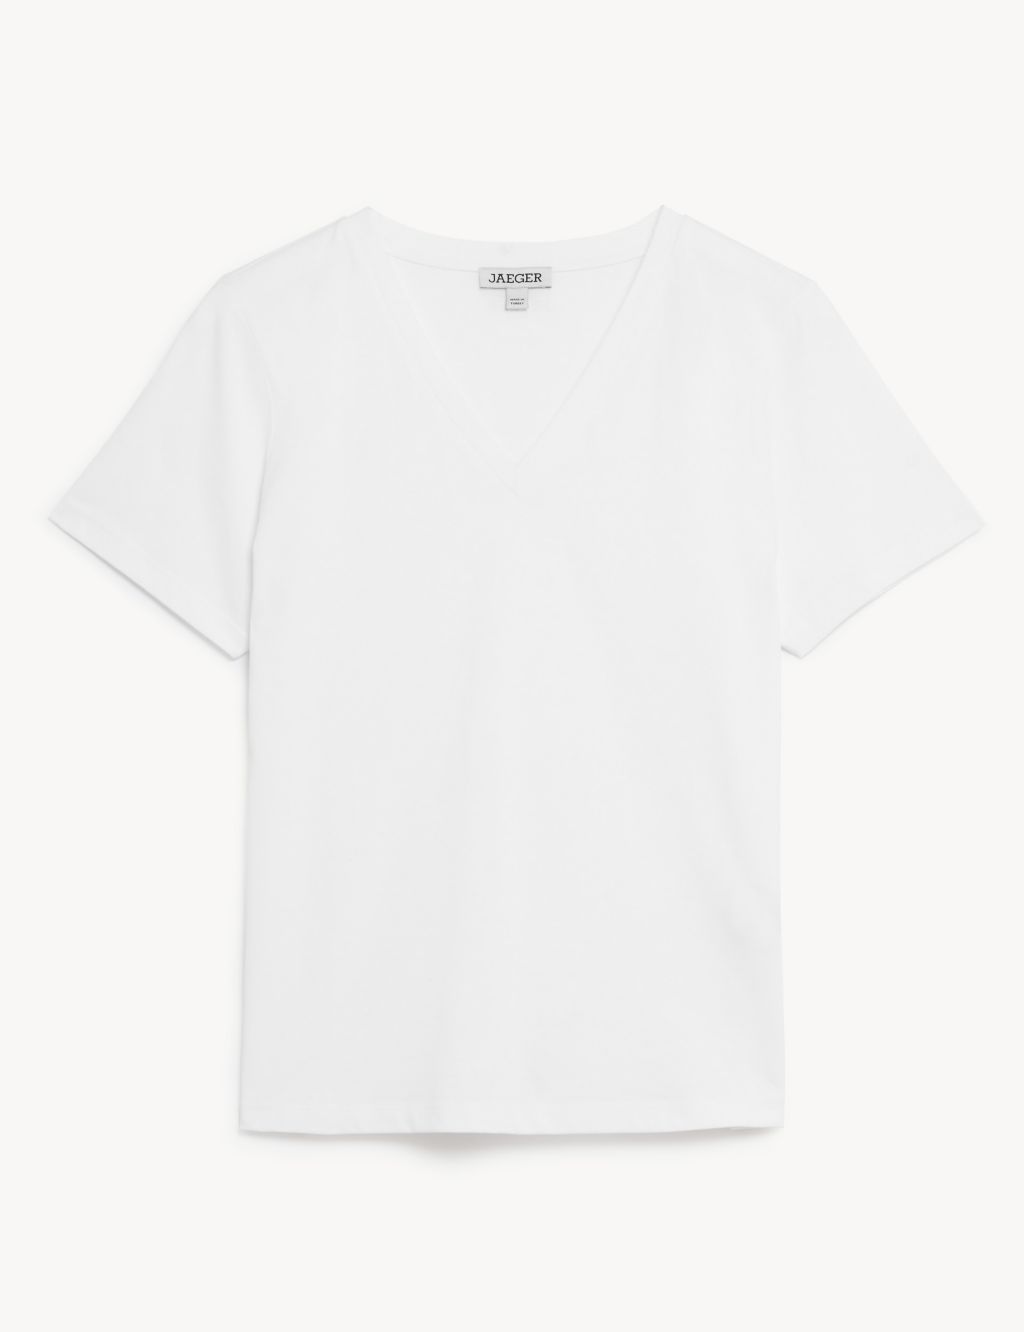 Pure Cotton V-Neck T-Shirt image 2